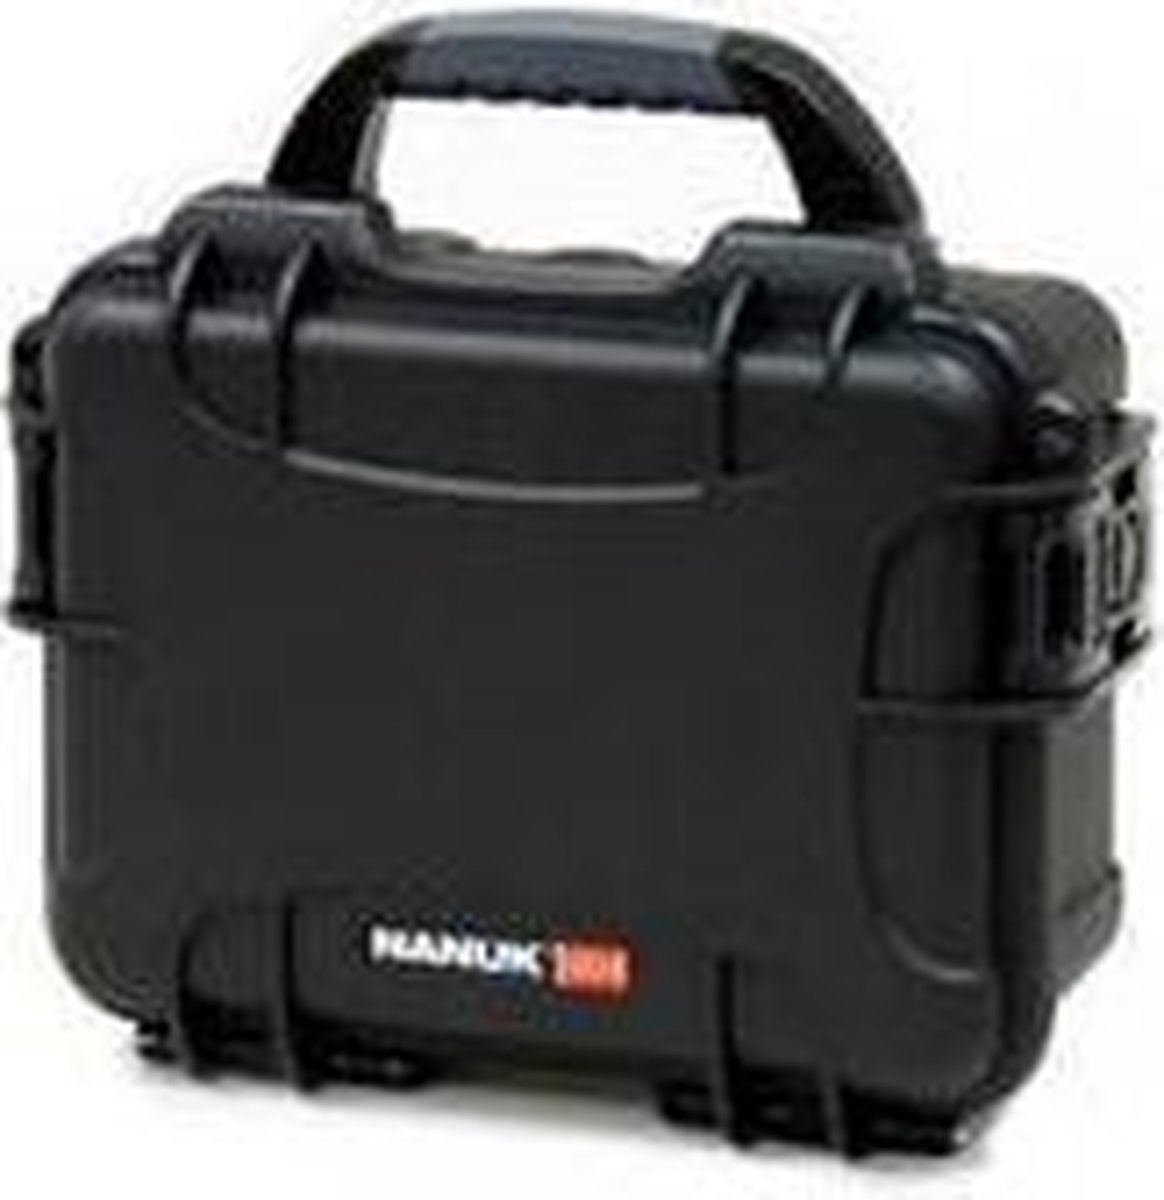 Nanuk 904 Case with Foam - Black